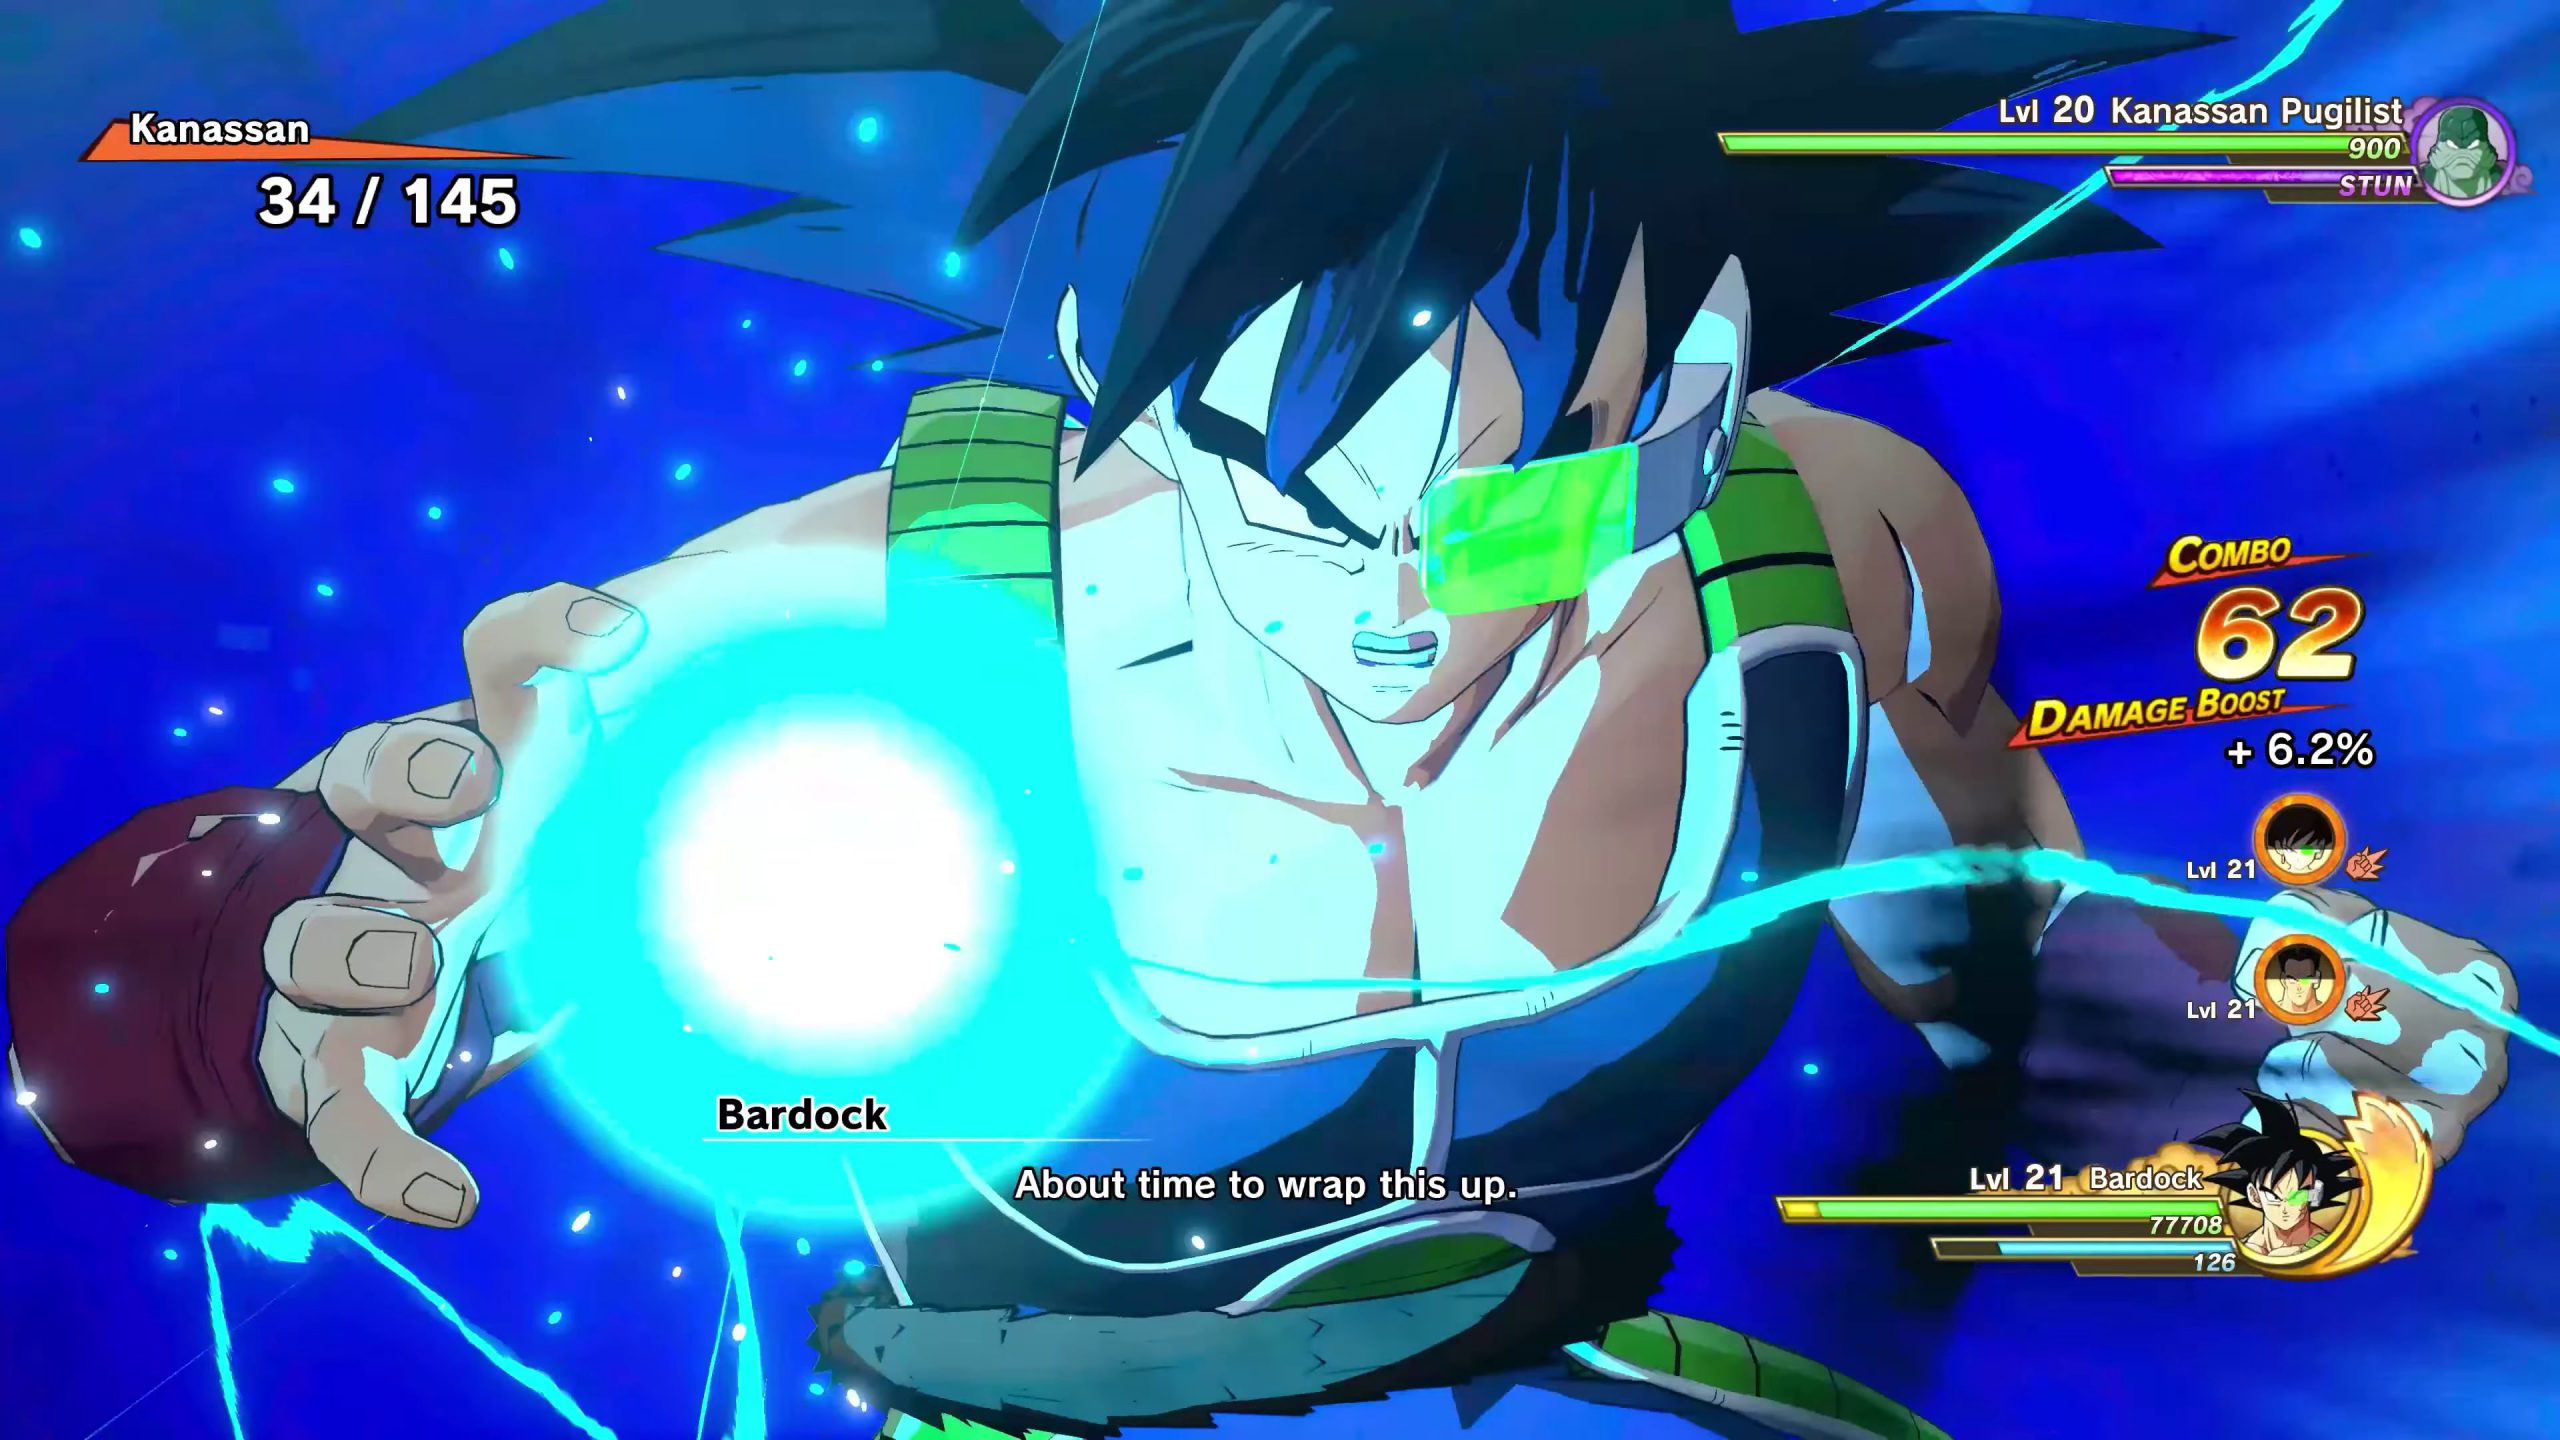 Tráiler final del DLC de Bardock para el videojuego Dragon Ball Z Kakarot |  Anime y Manga noticias online [Mision Tokyo]